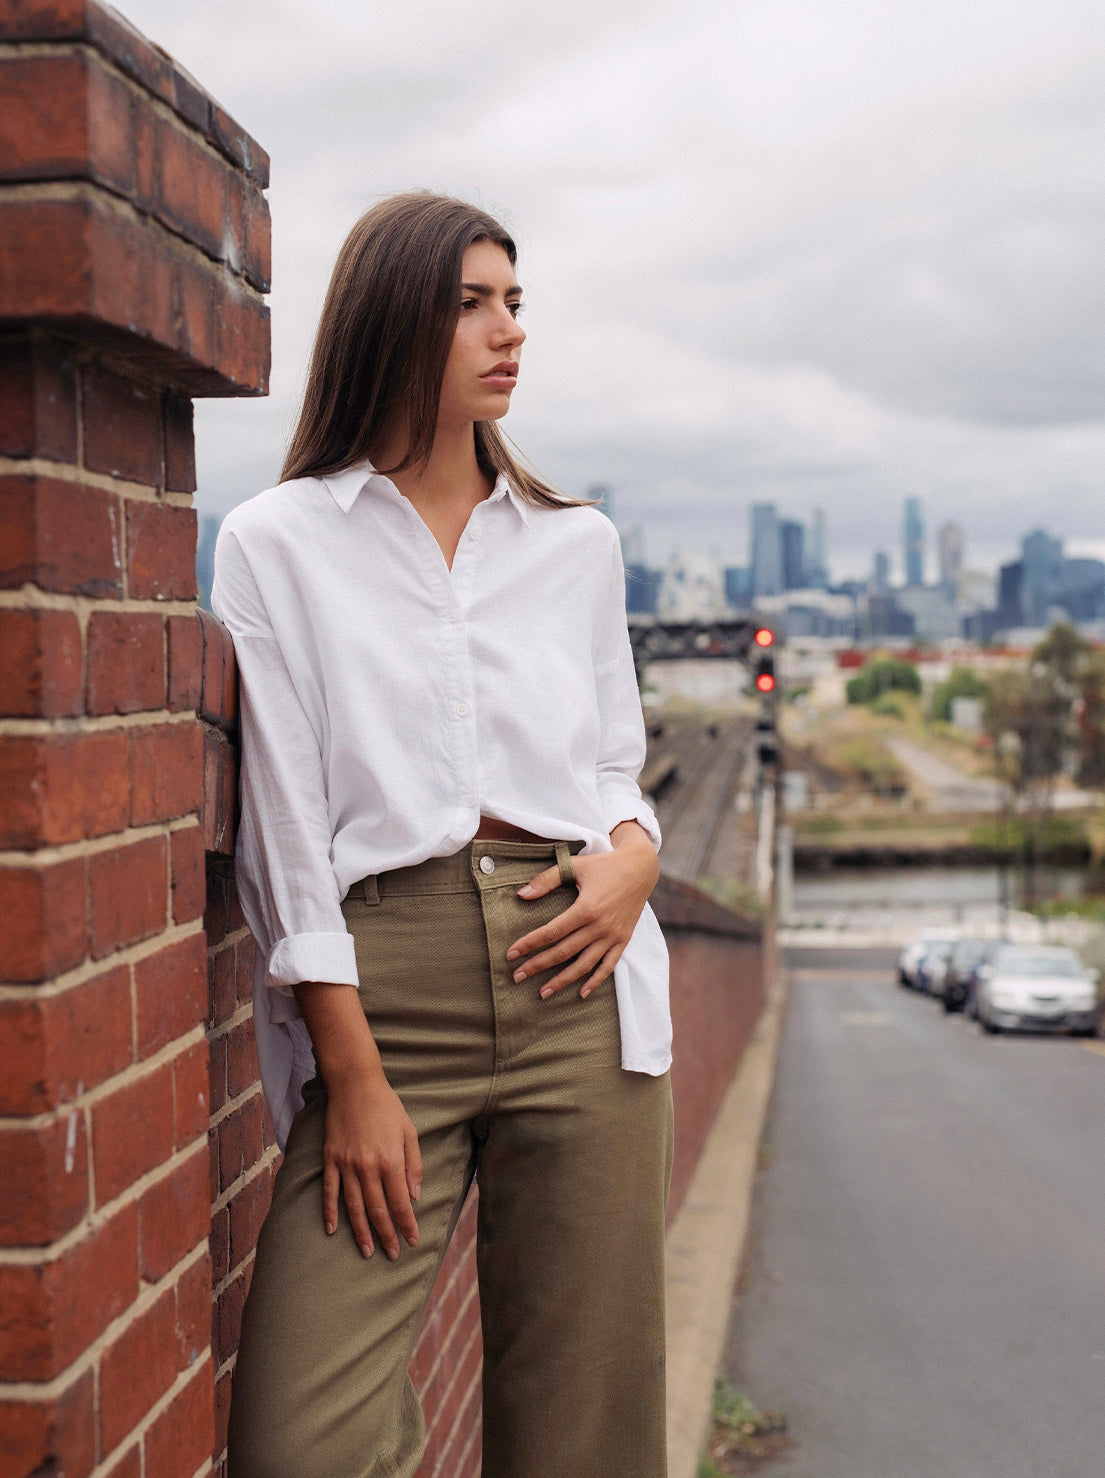 Hemp Clothing Australia - Stirling Shirt - White